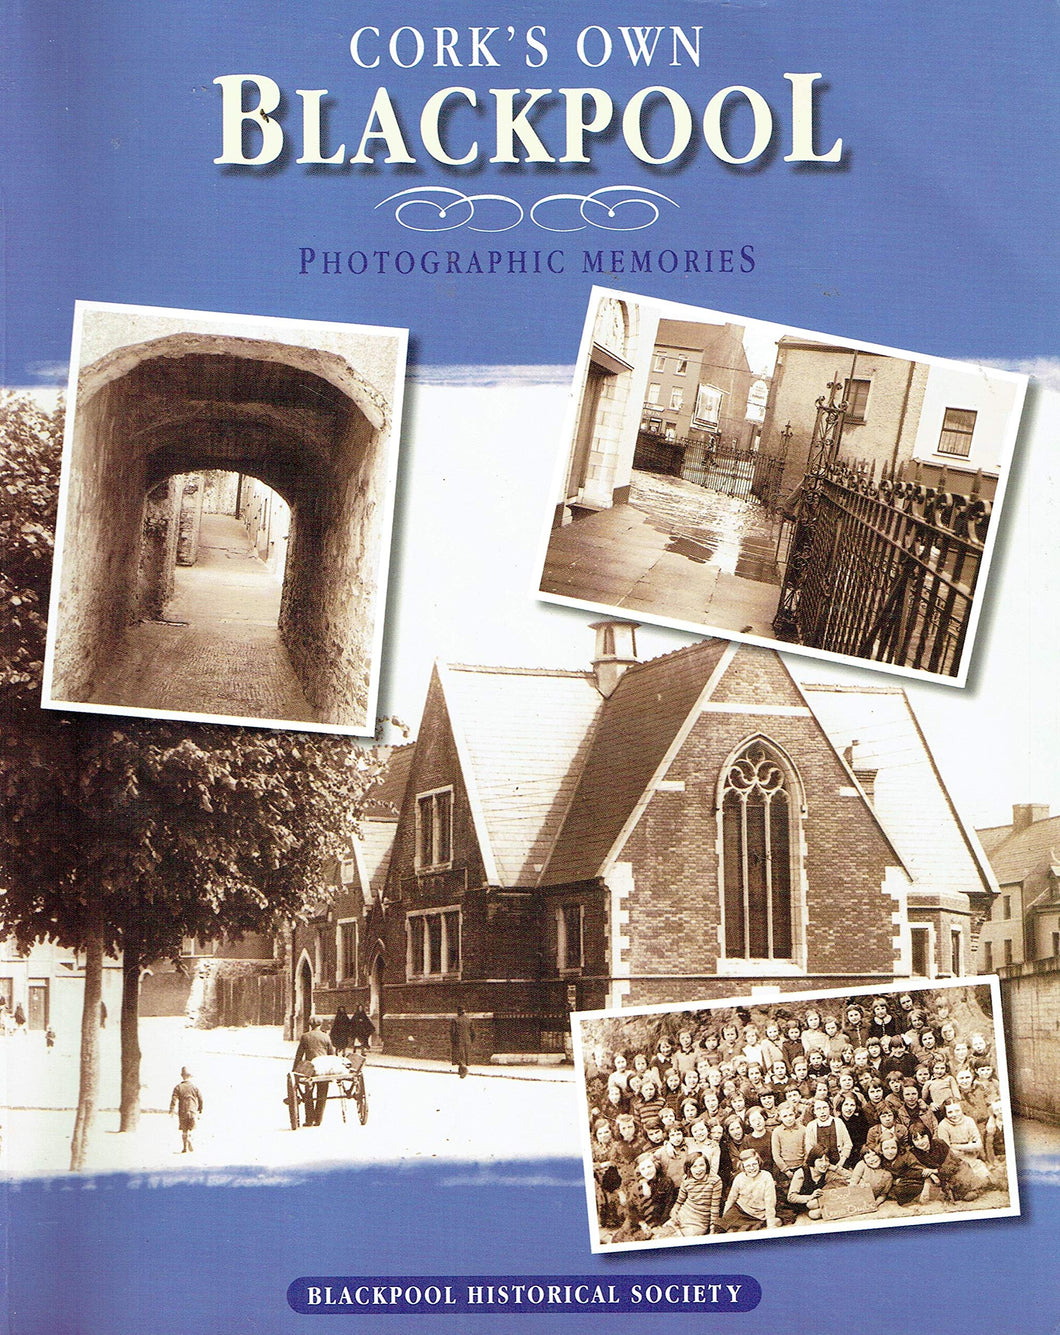 Cork's Own Blackpool: Photographic Memories